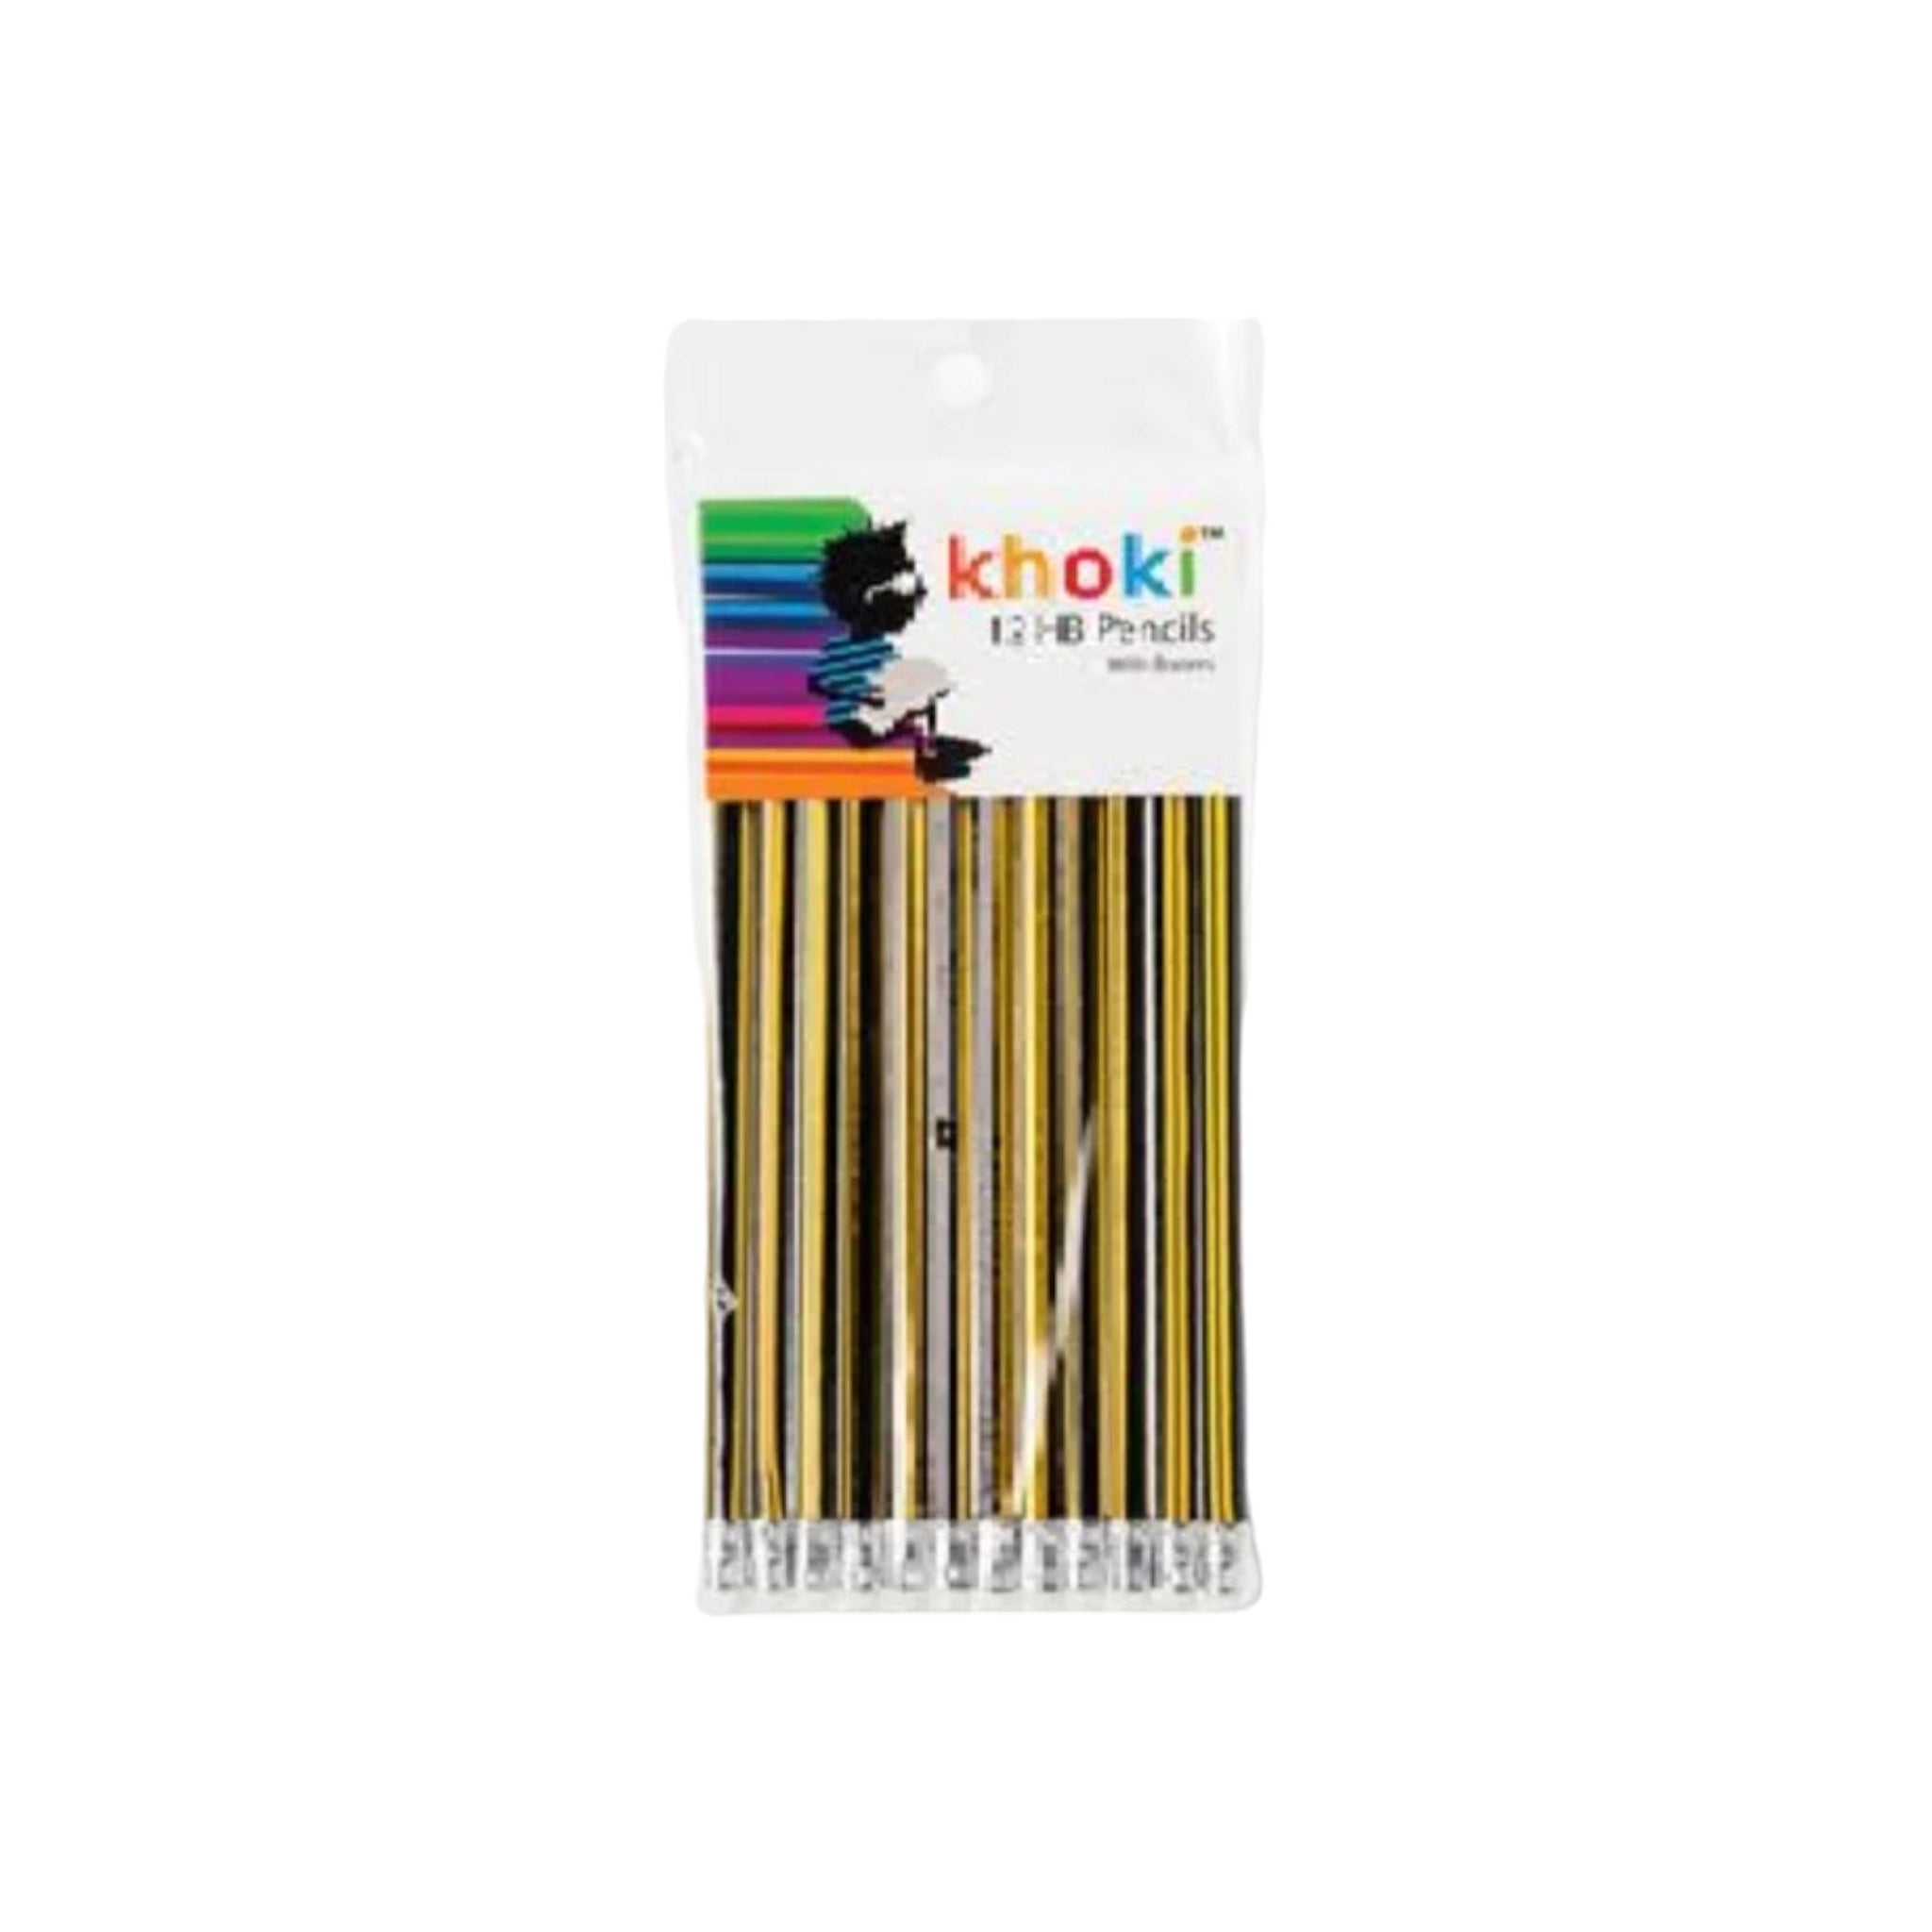 Khoki Pencils With Eraser 12pc